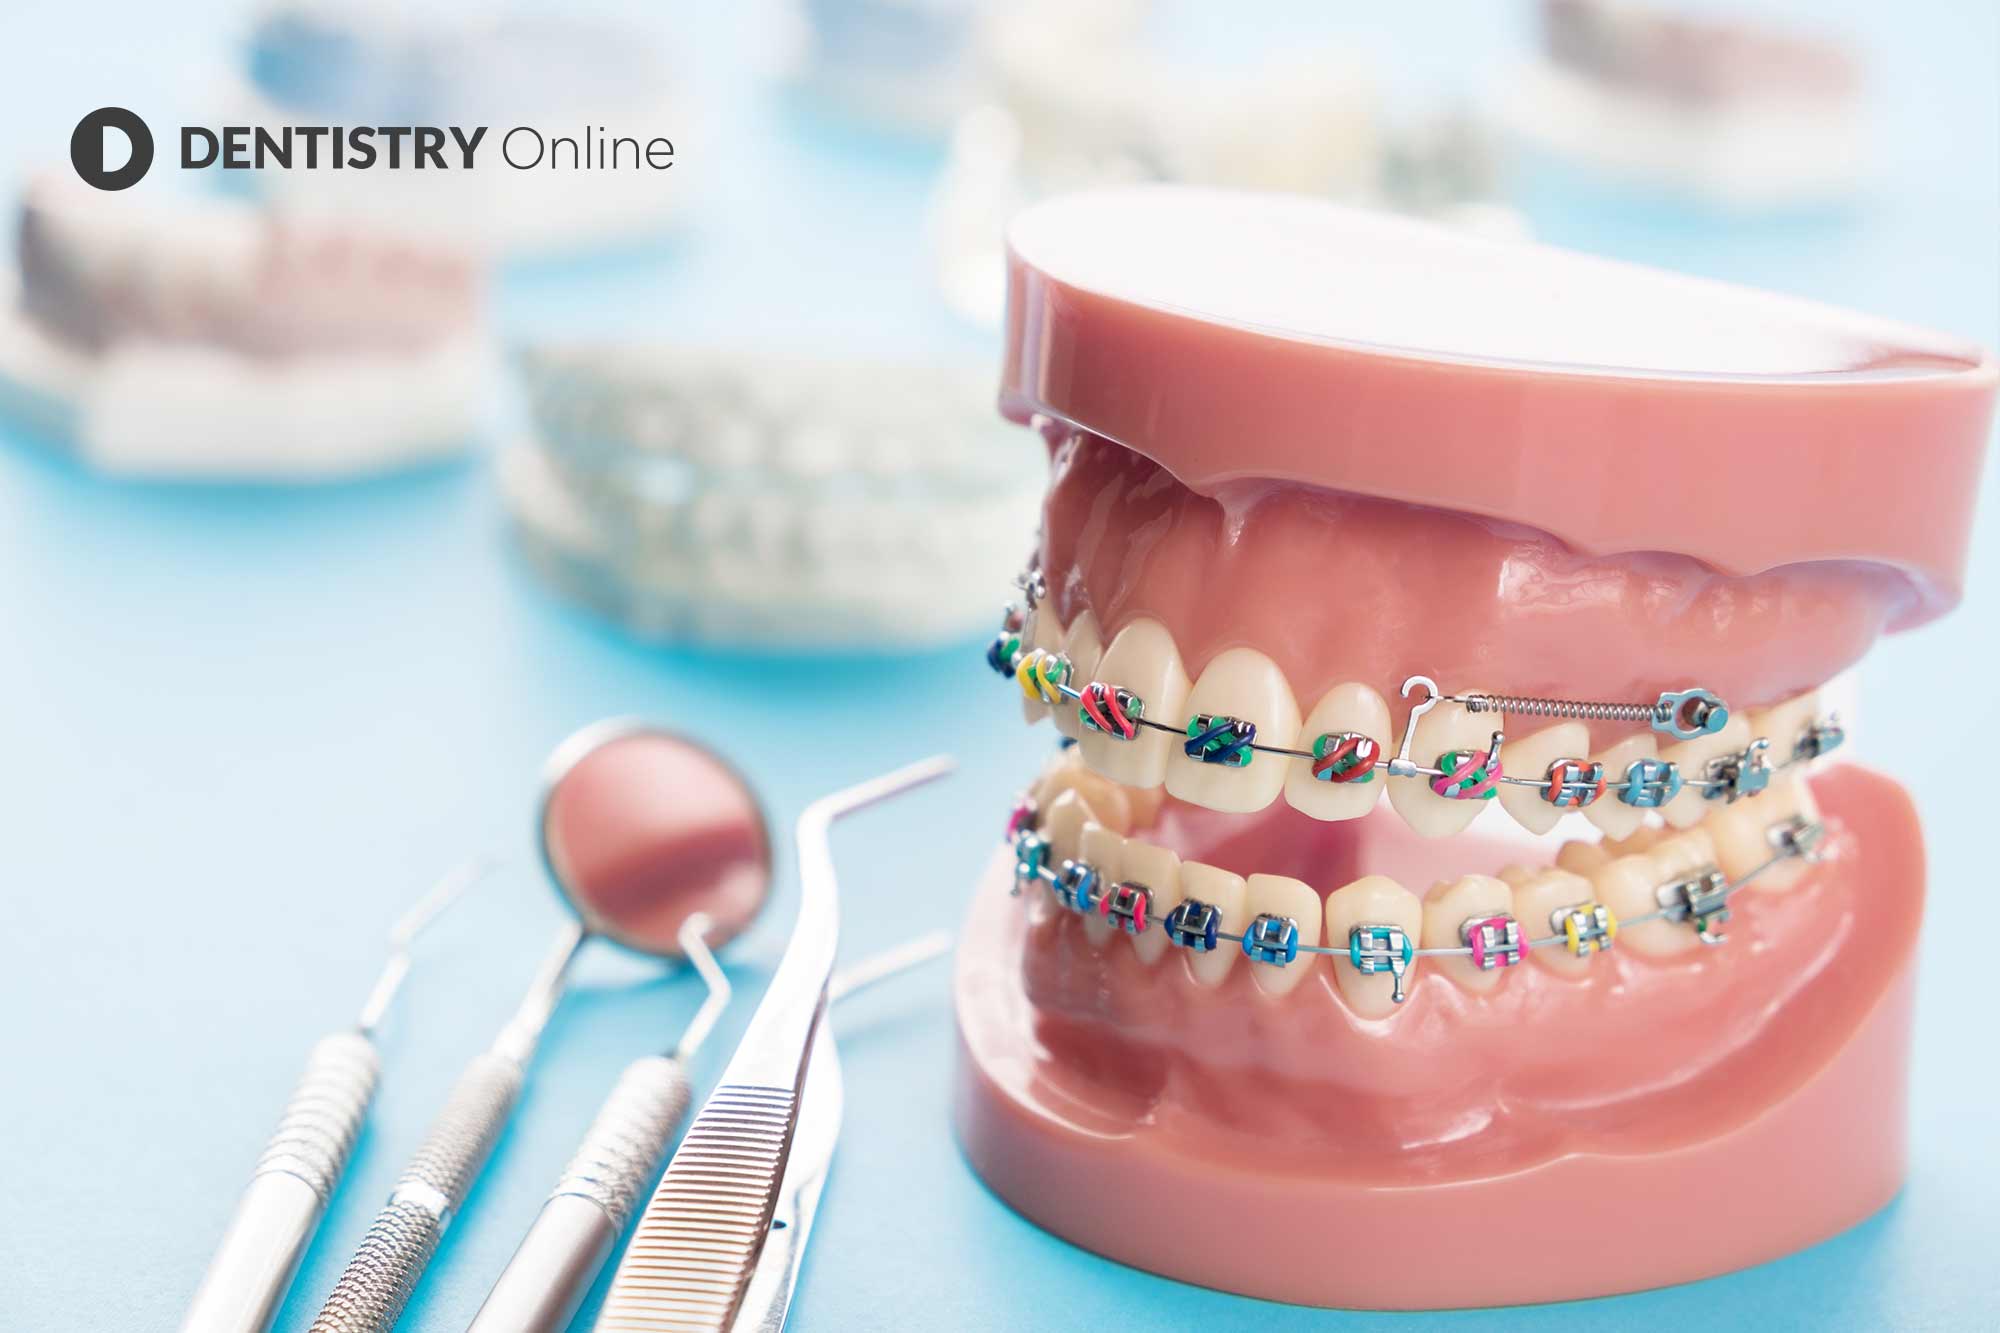 orthodontic marketing cmo